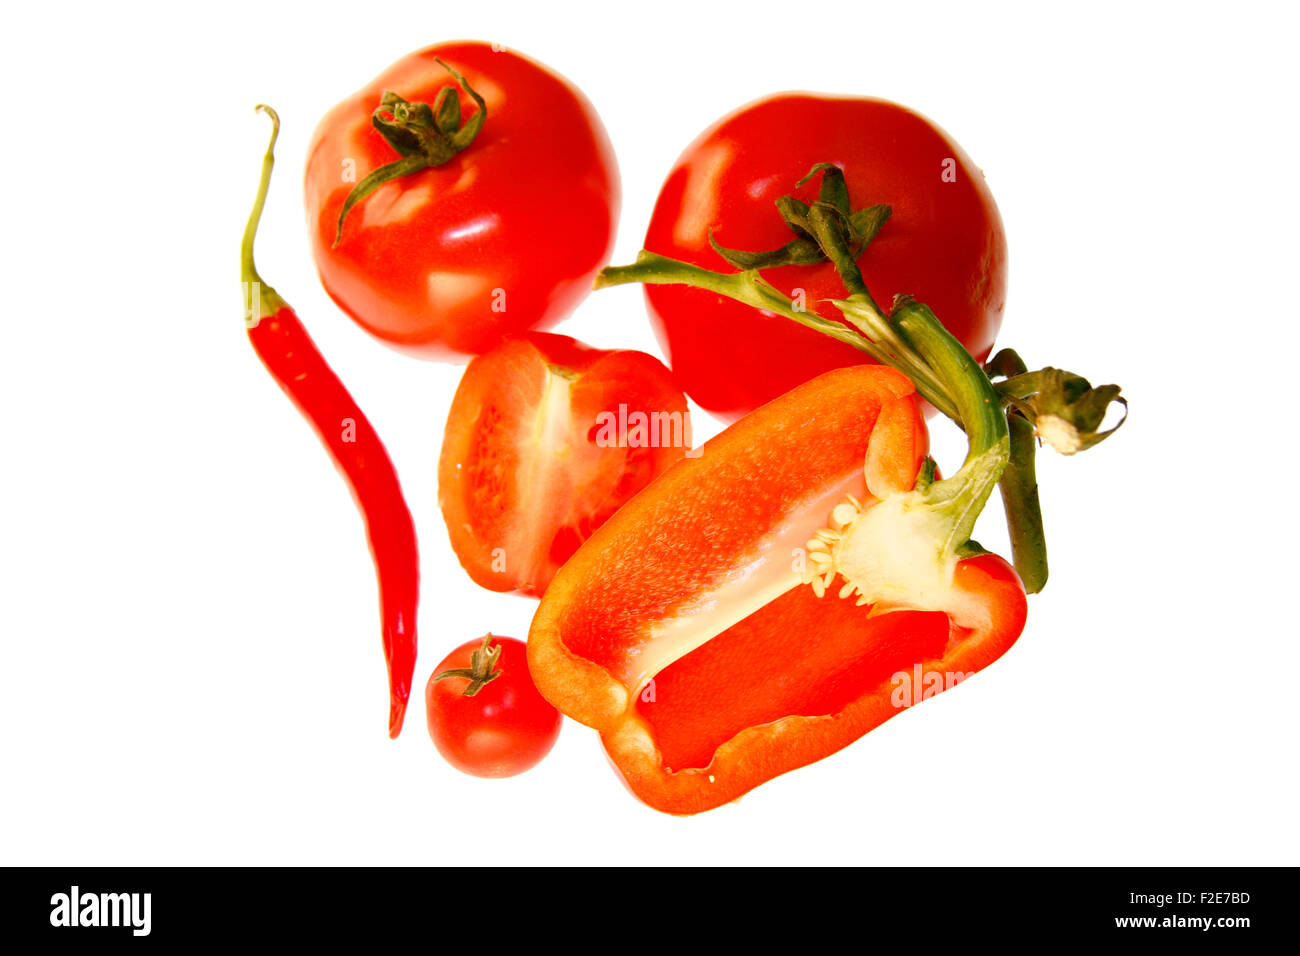 Kühl-Schote, Tomaten, Paprika-Schote - Symbolbild Nahrungsmittel. Stockfoto